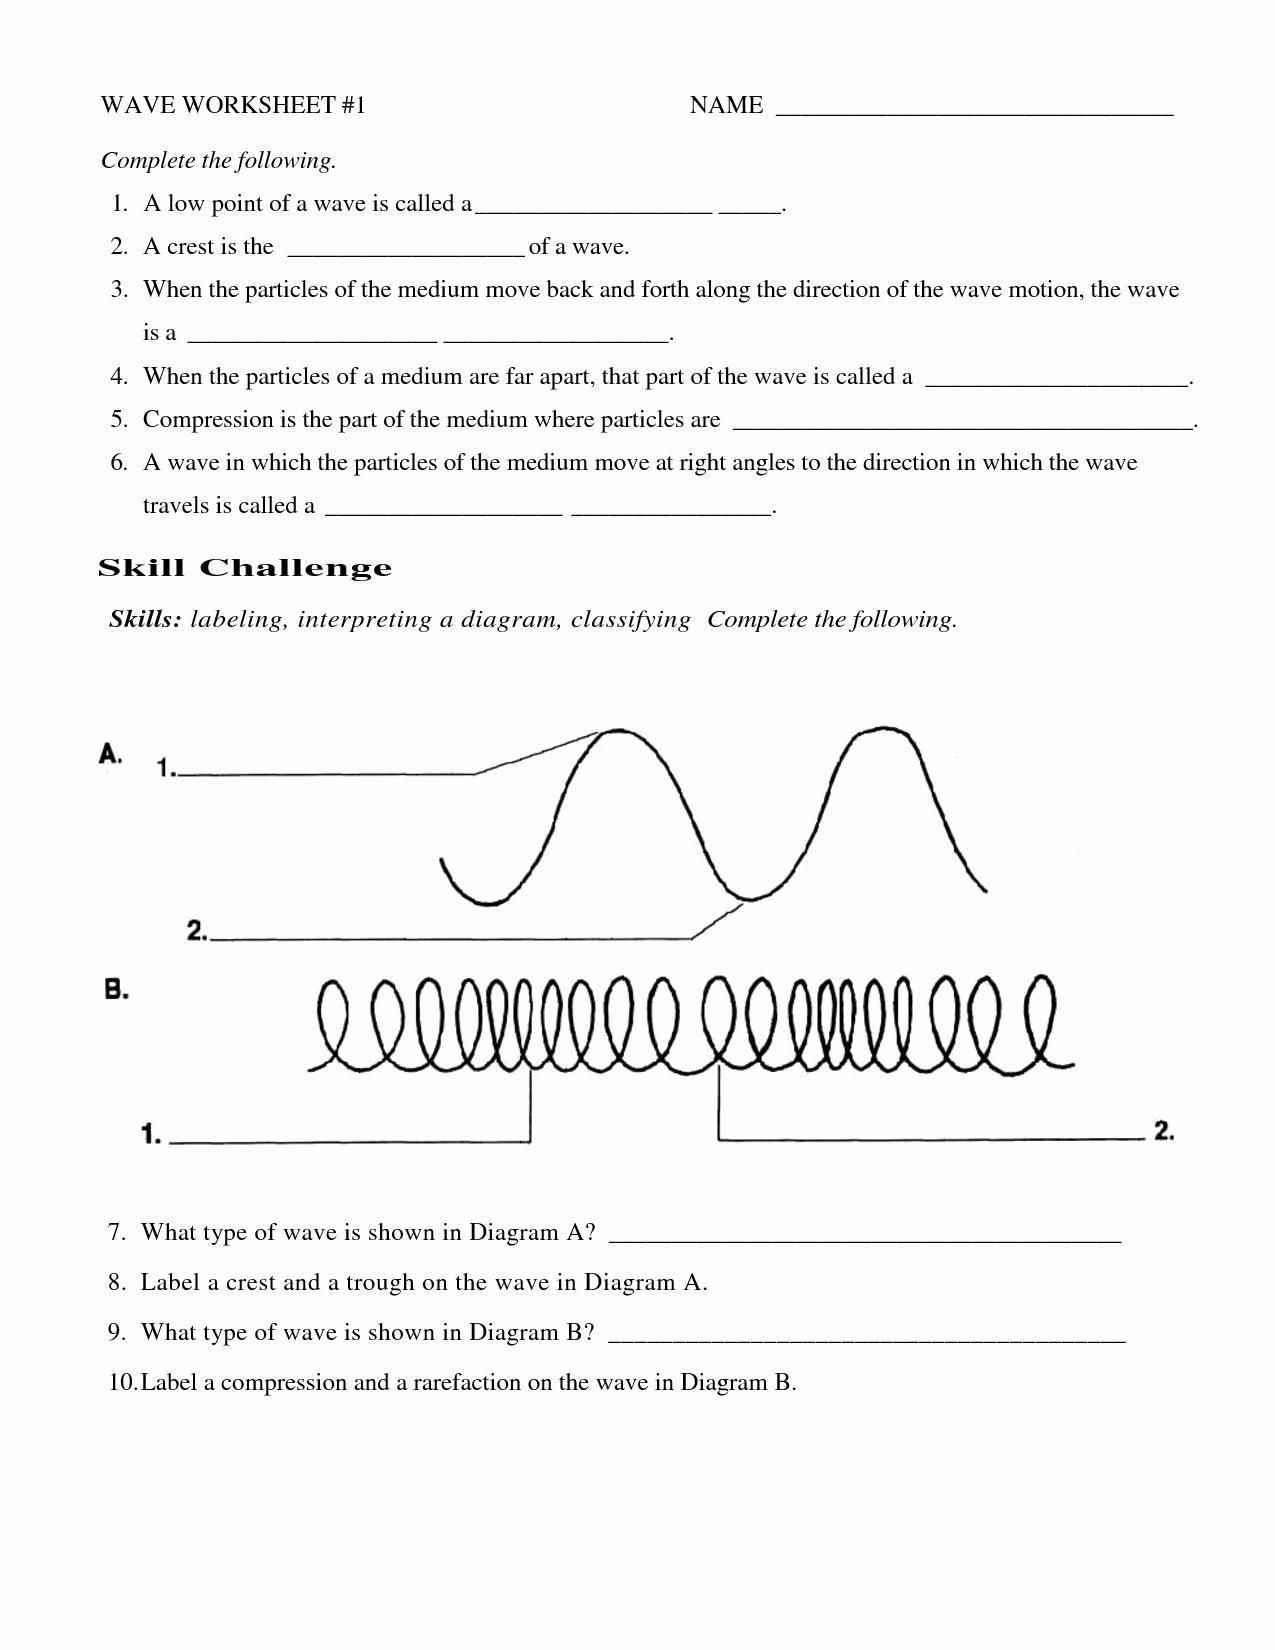 Waves Worksheet 1 Answers Inspirational 16 Best Of Wave Worksheet 1 Answer Key Labeling